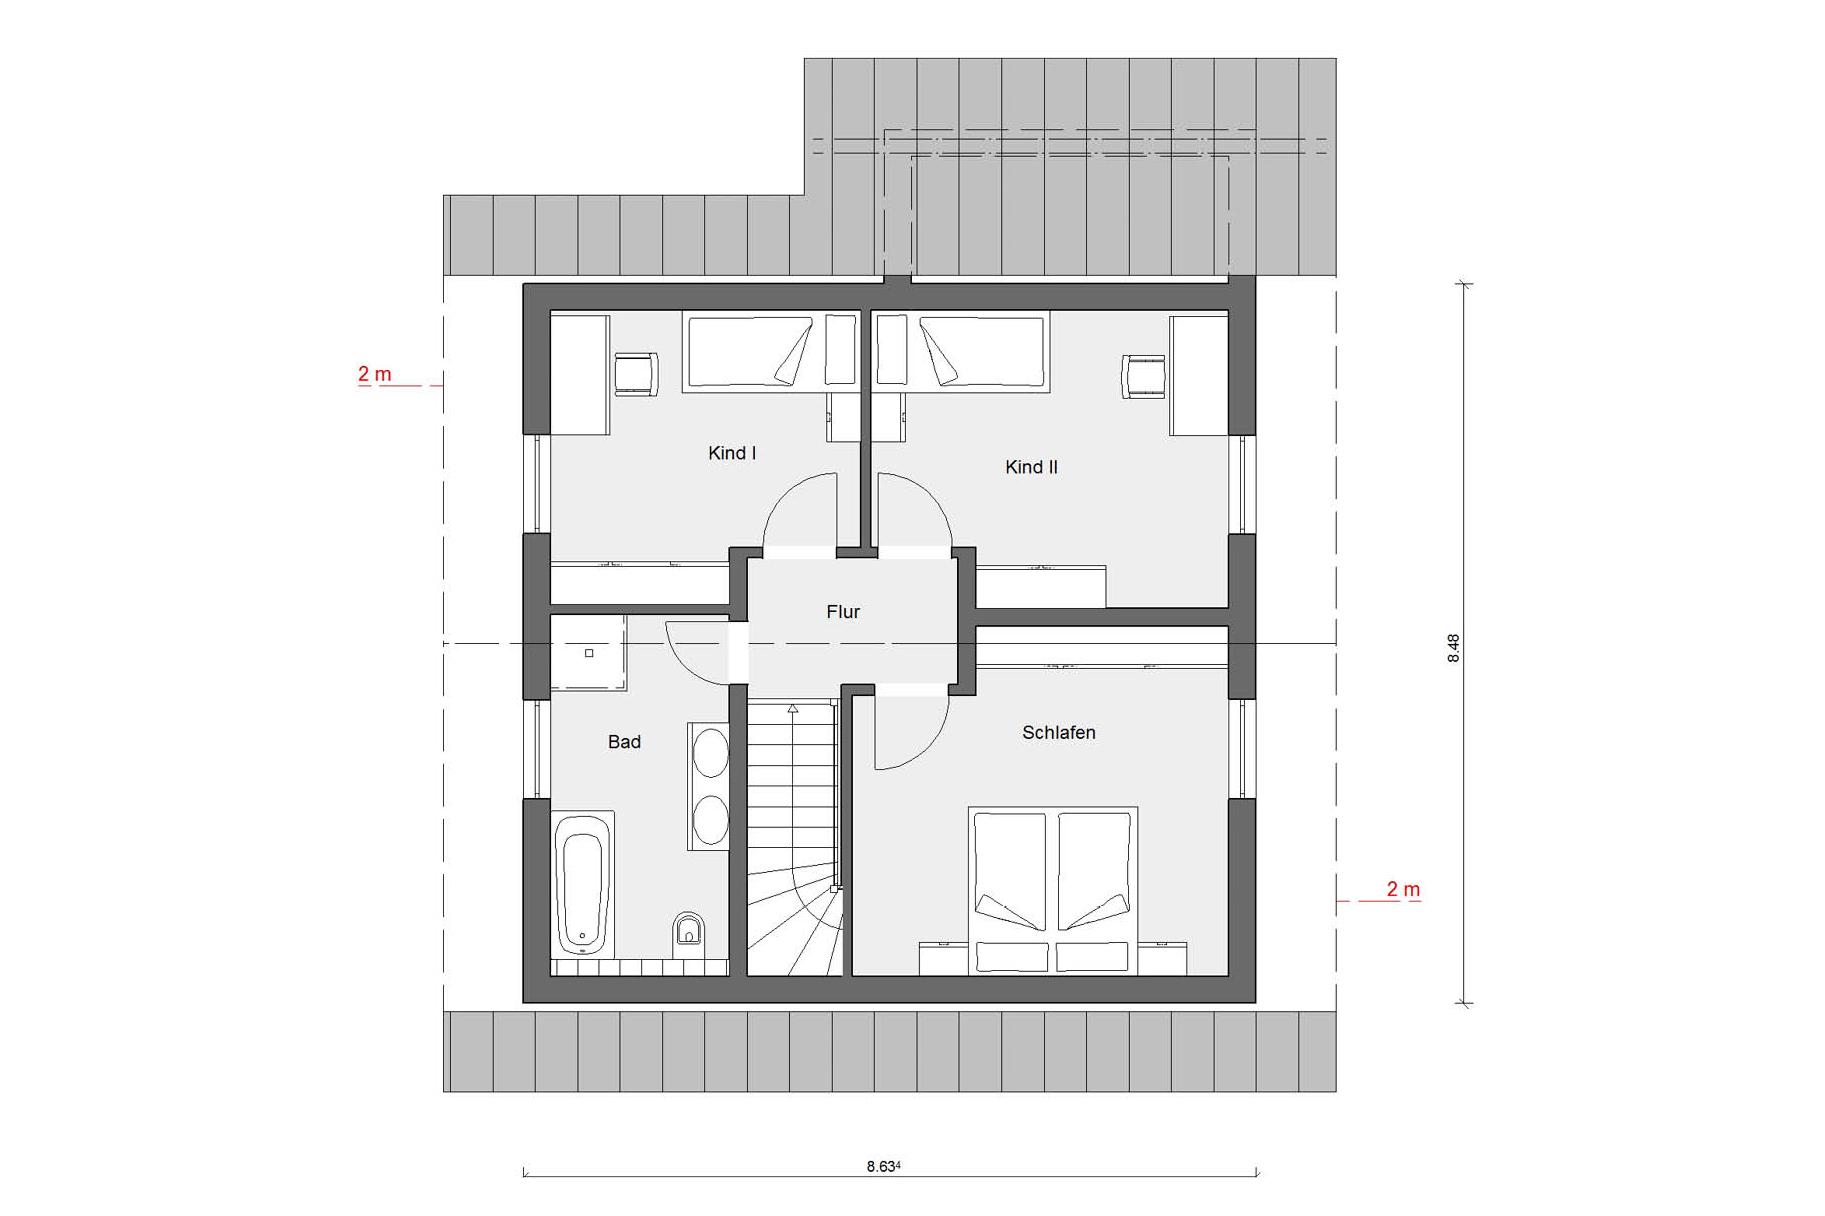 Pianta soffitta E 15-126.7 Attraente architettura